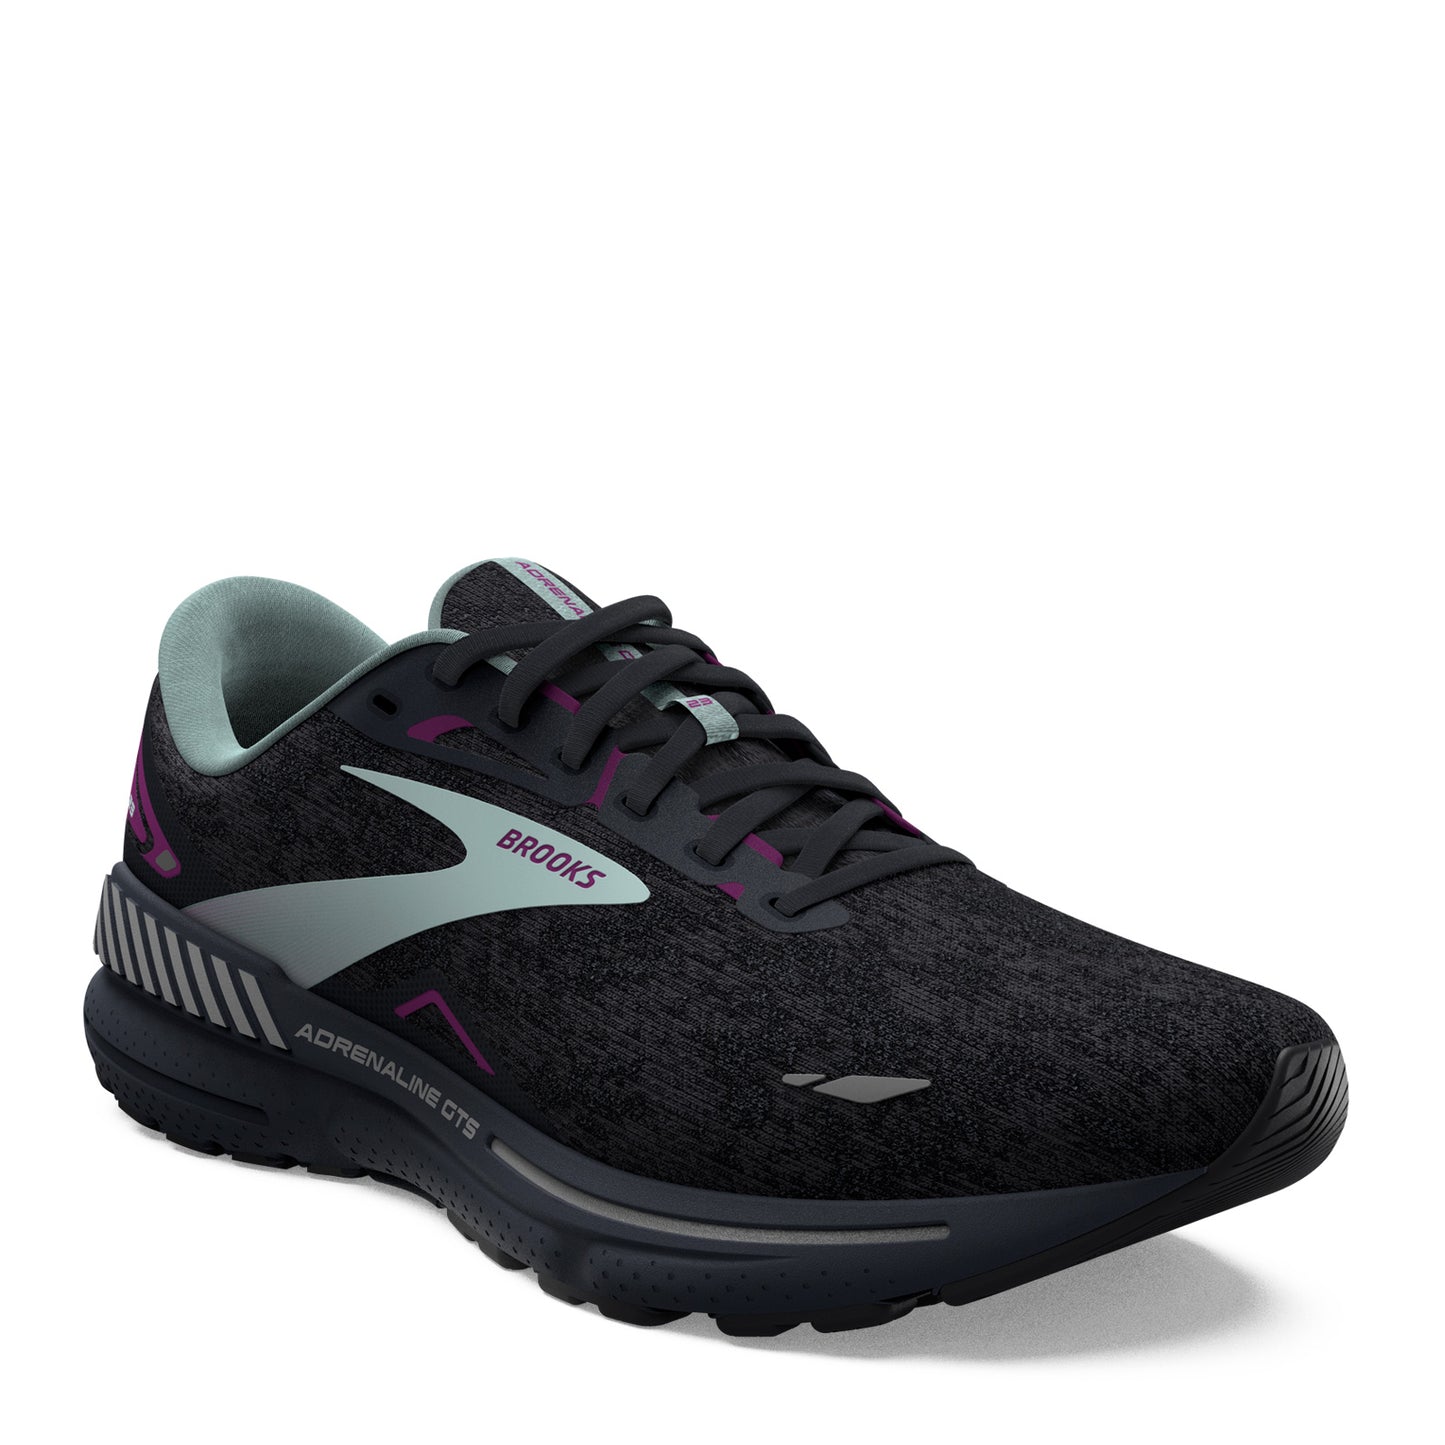 Peltz Shoes  Women's Brooks Adrenaline GTS 23 Running Shoe Black/Light Blue/Purple 120381 1B 072